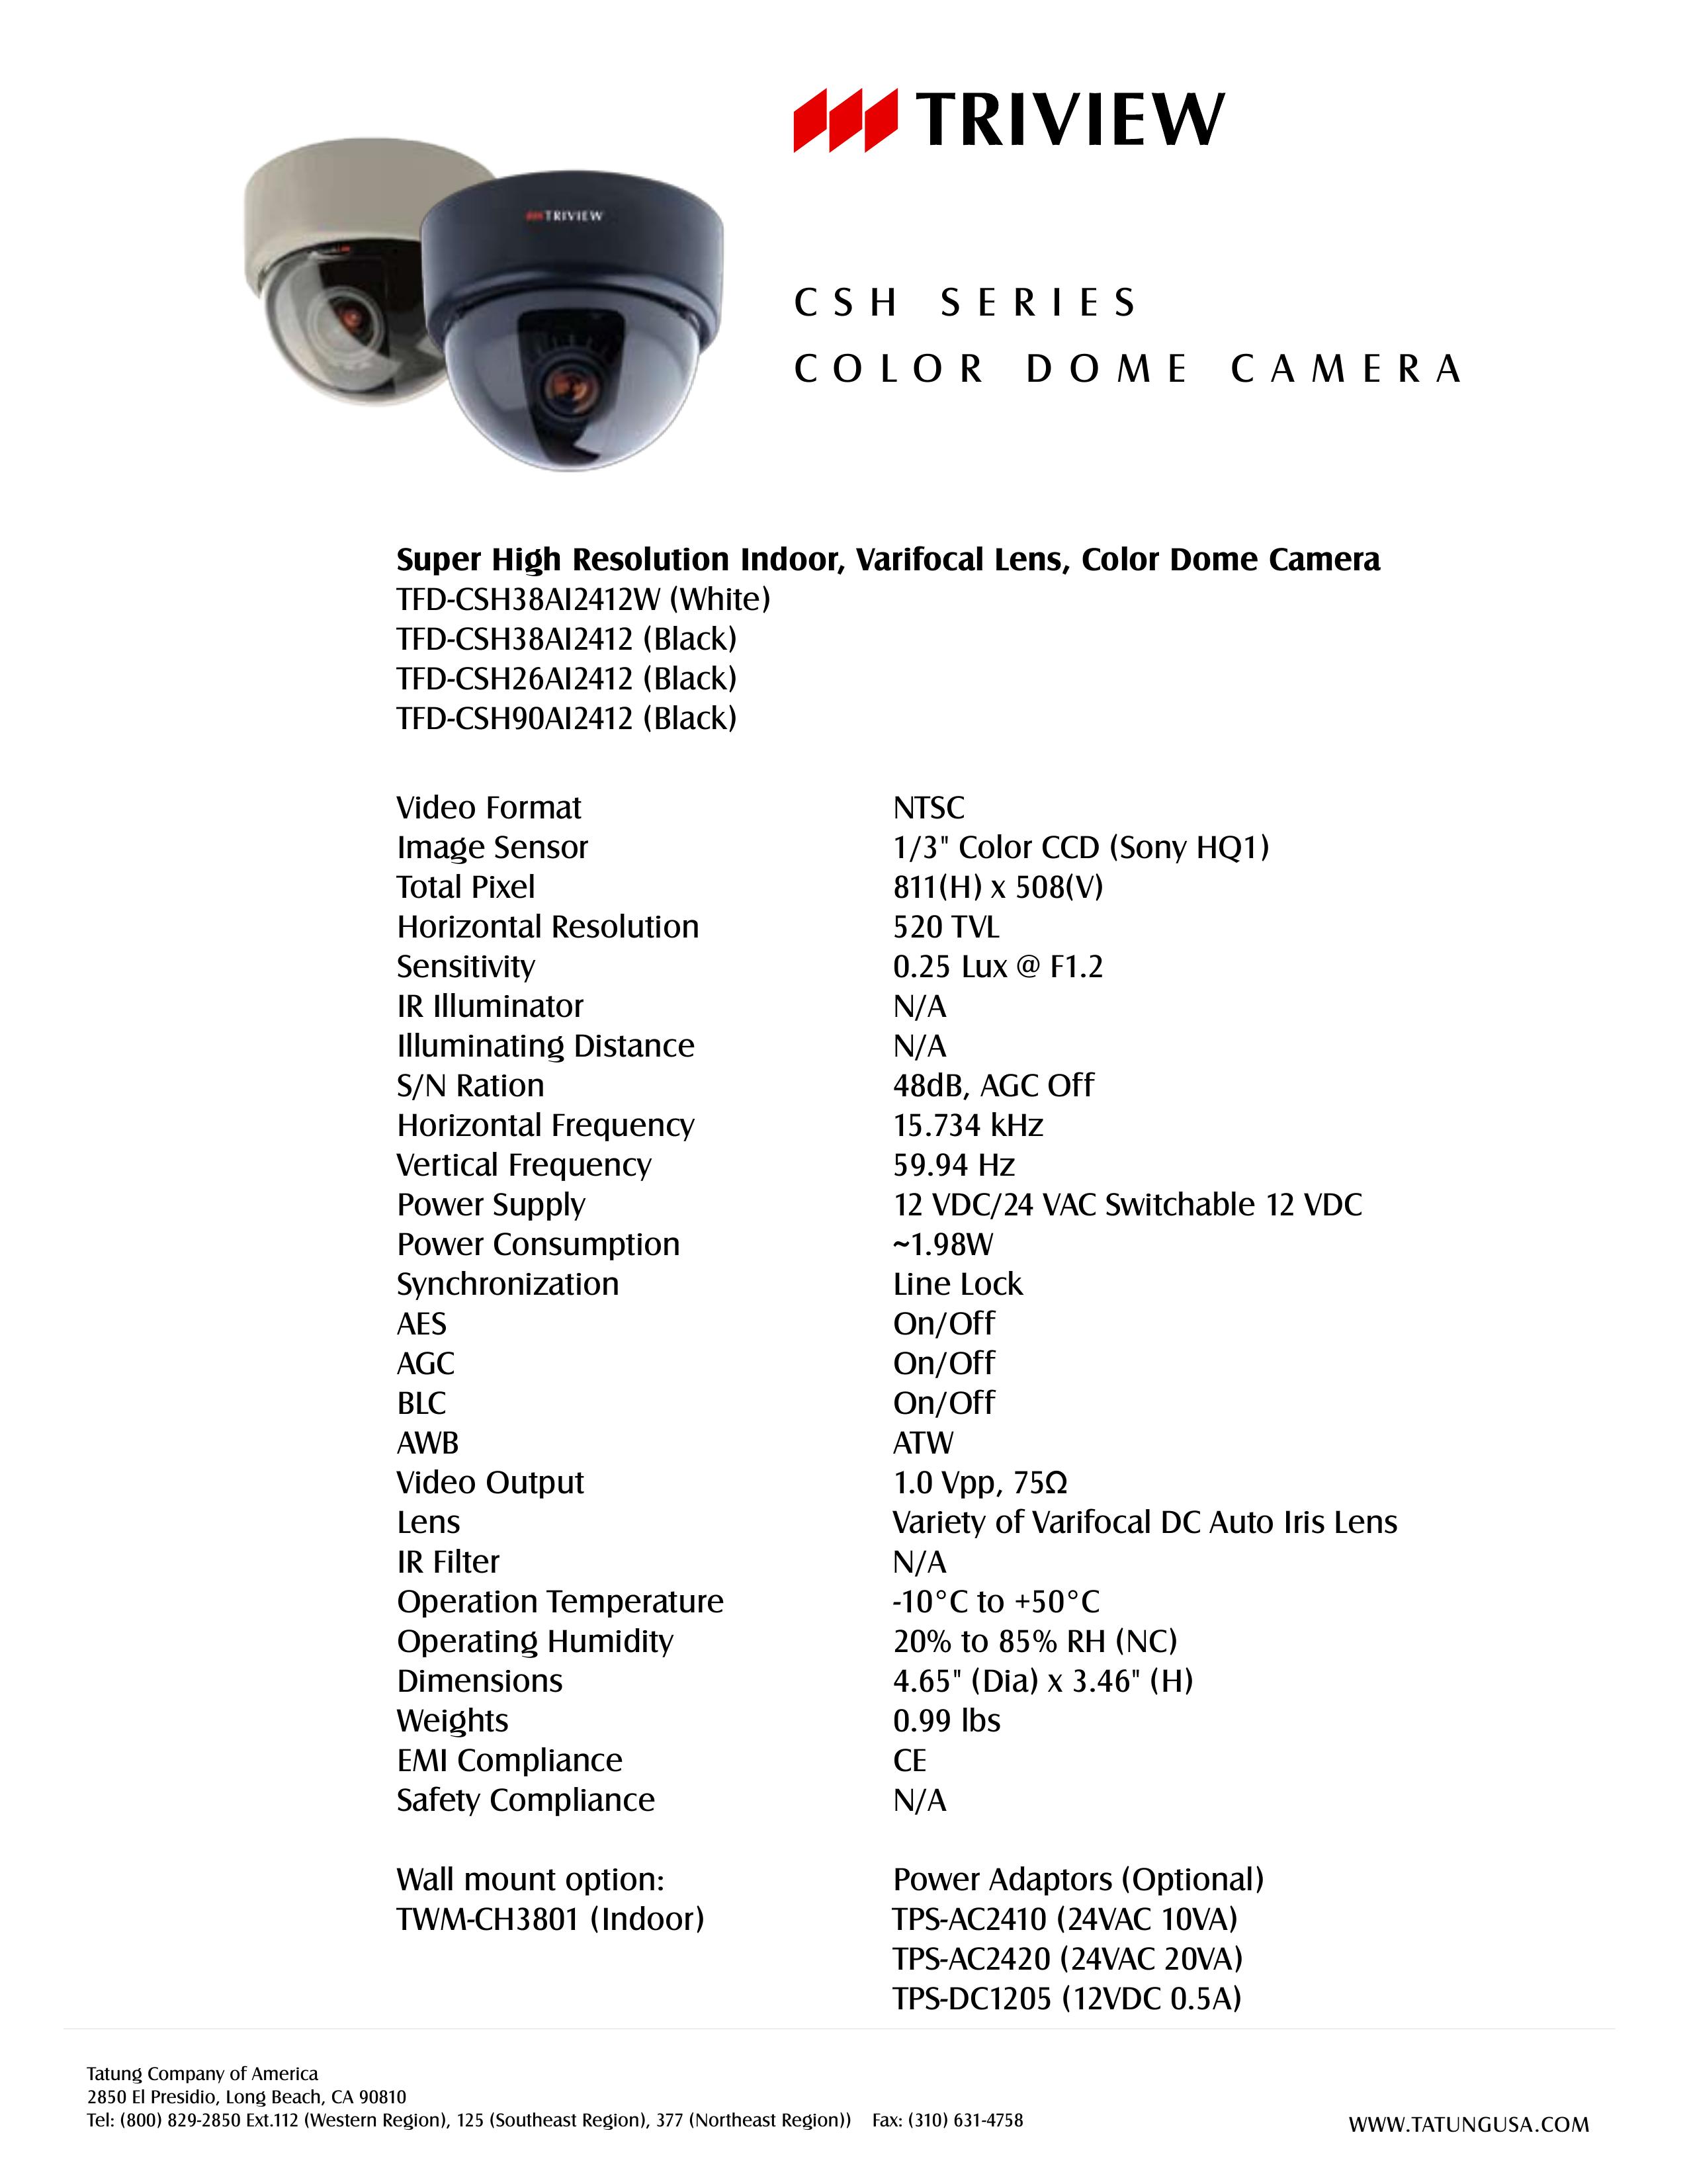 Tatung CSH Series Security Camera User Manual